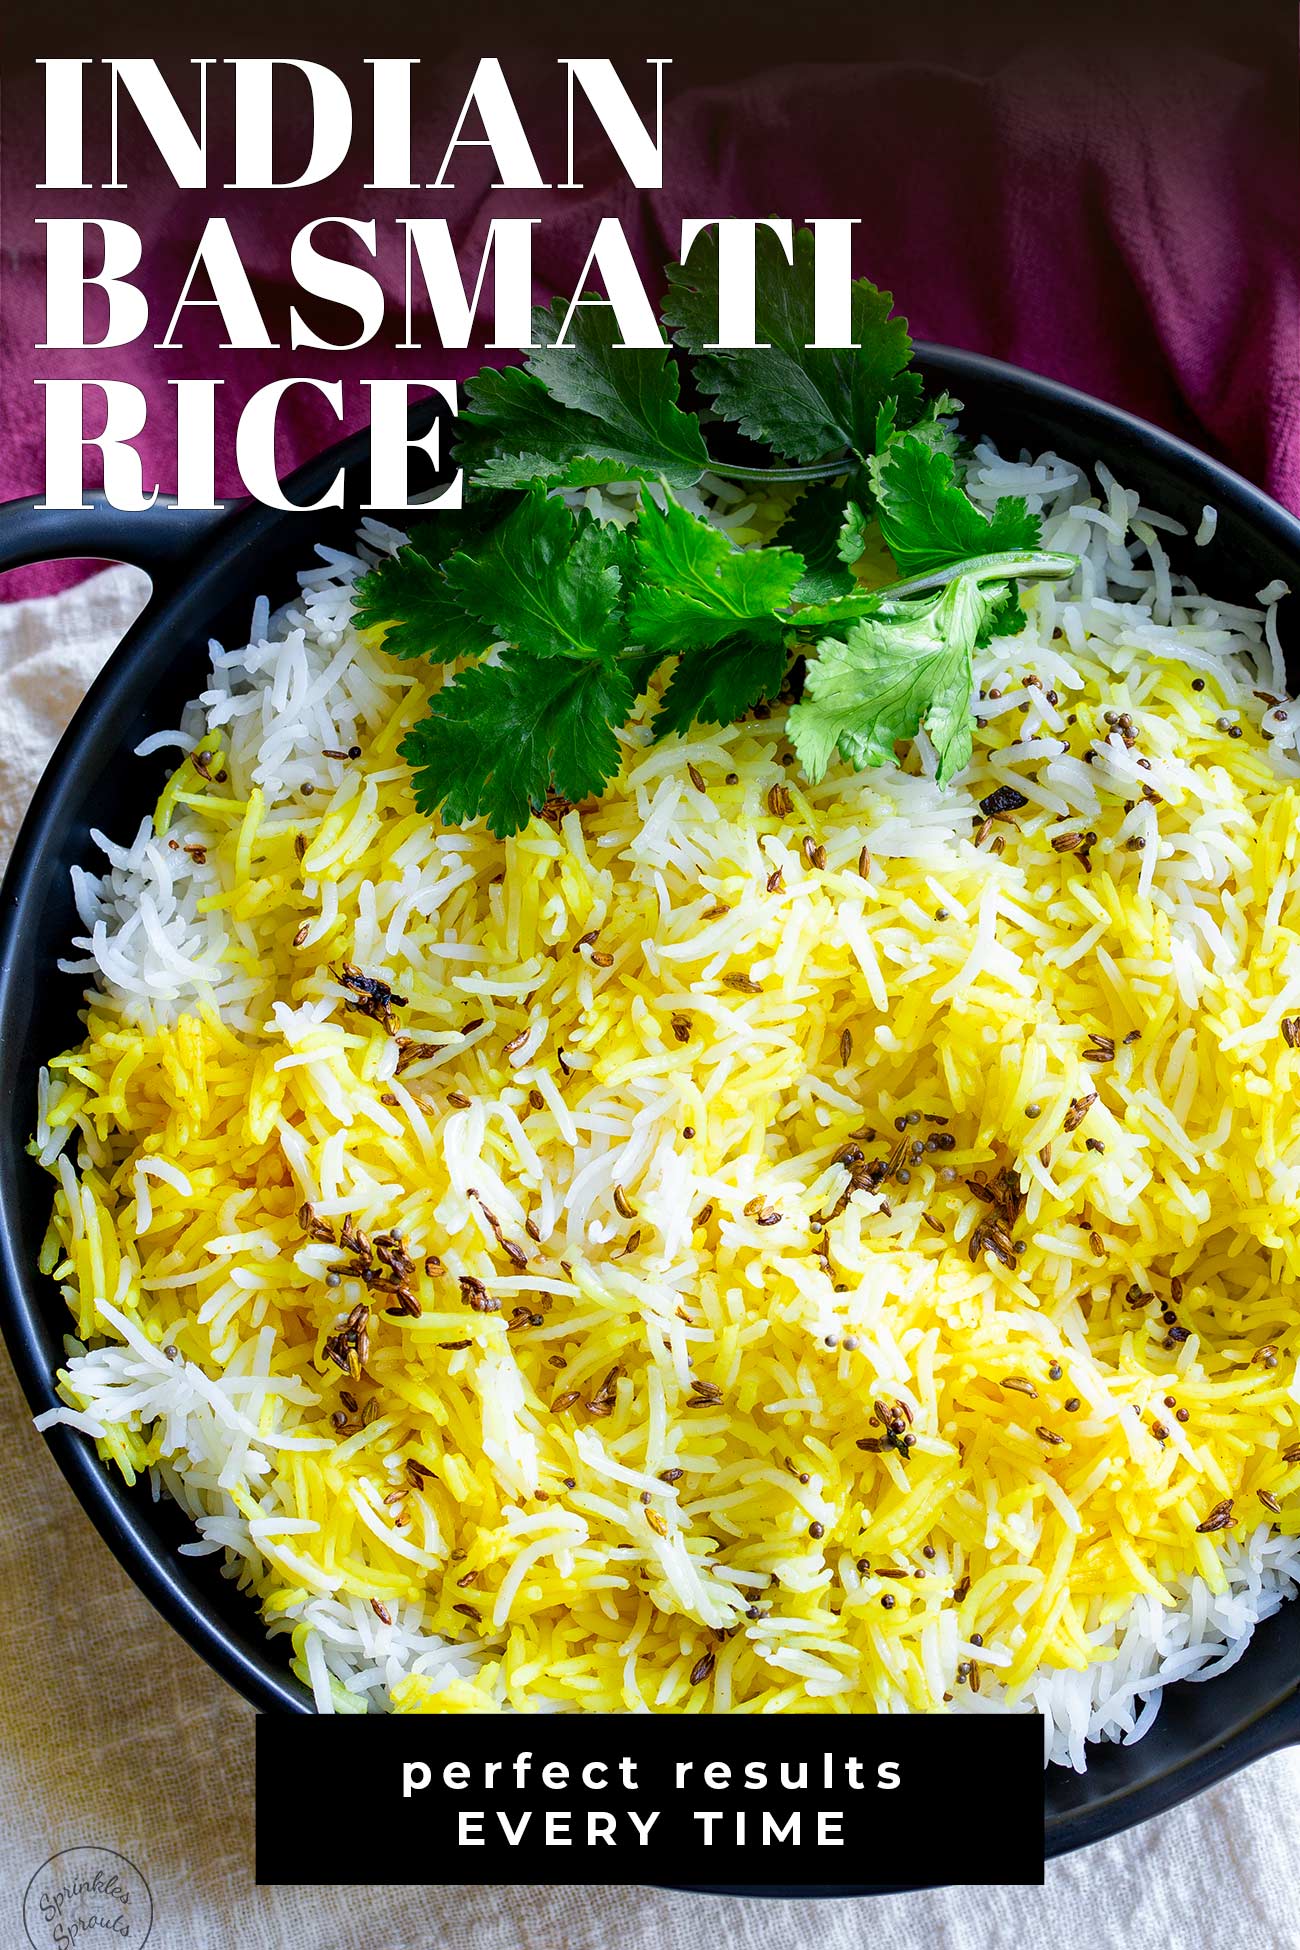 PINTEREST IMAGE: Basmati rice with text overlay